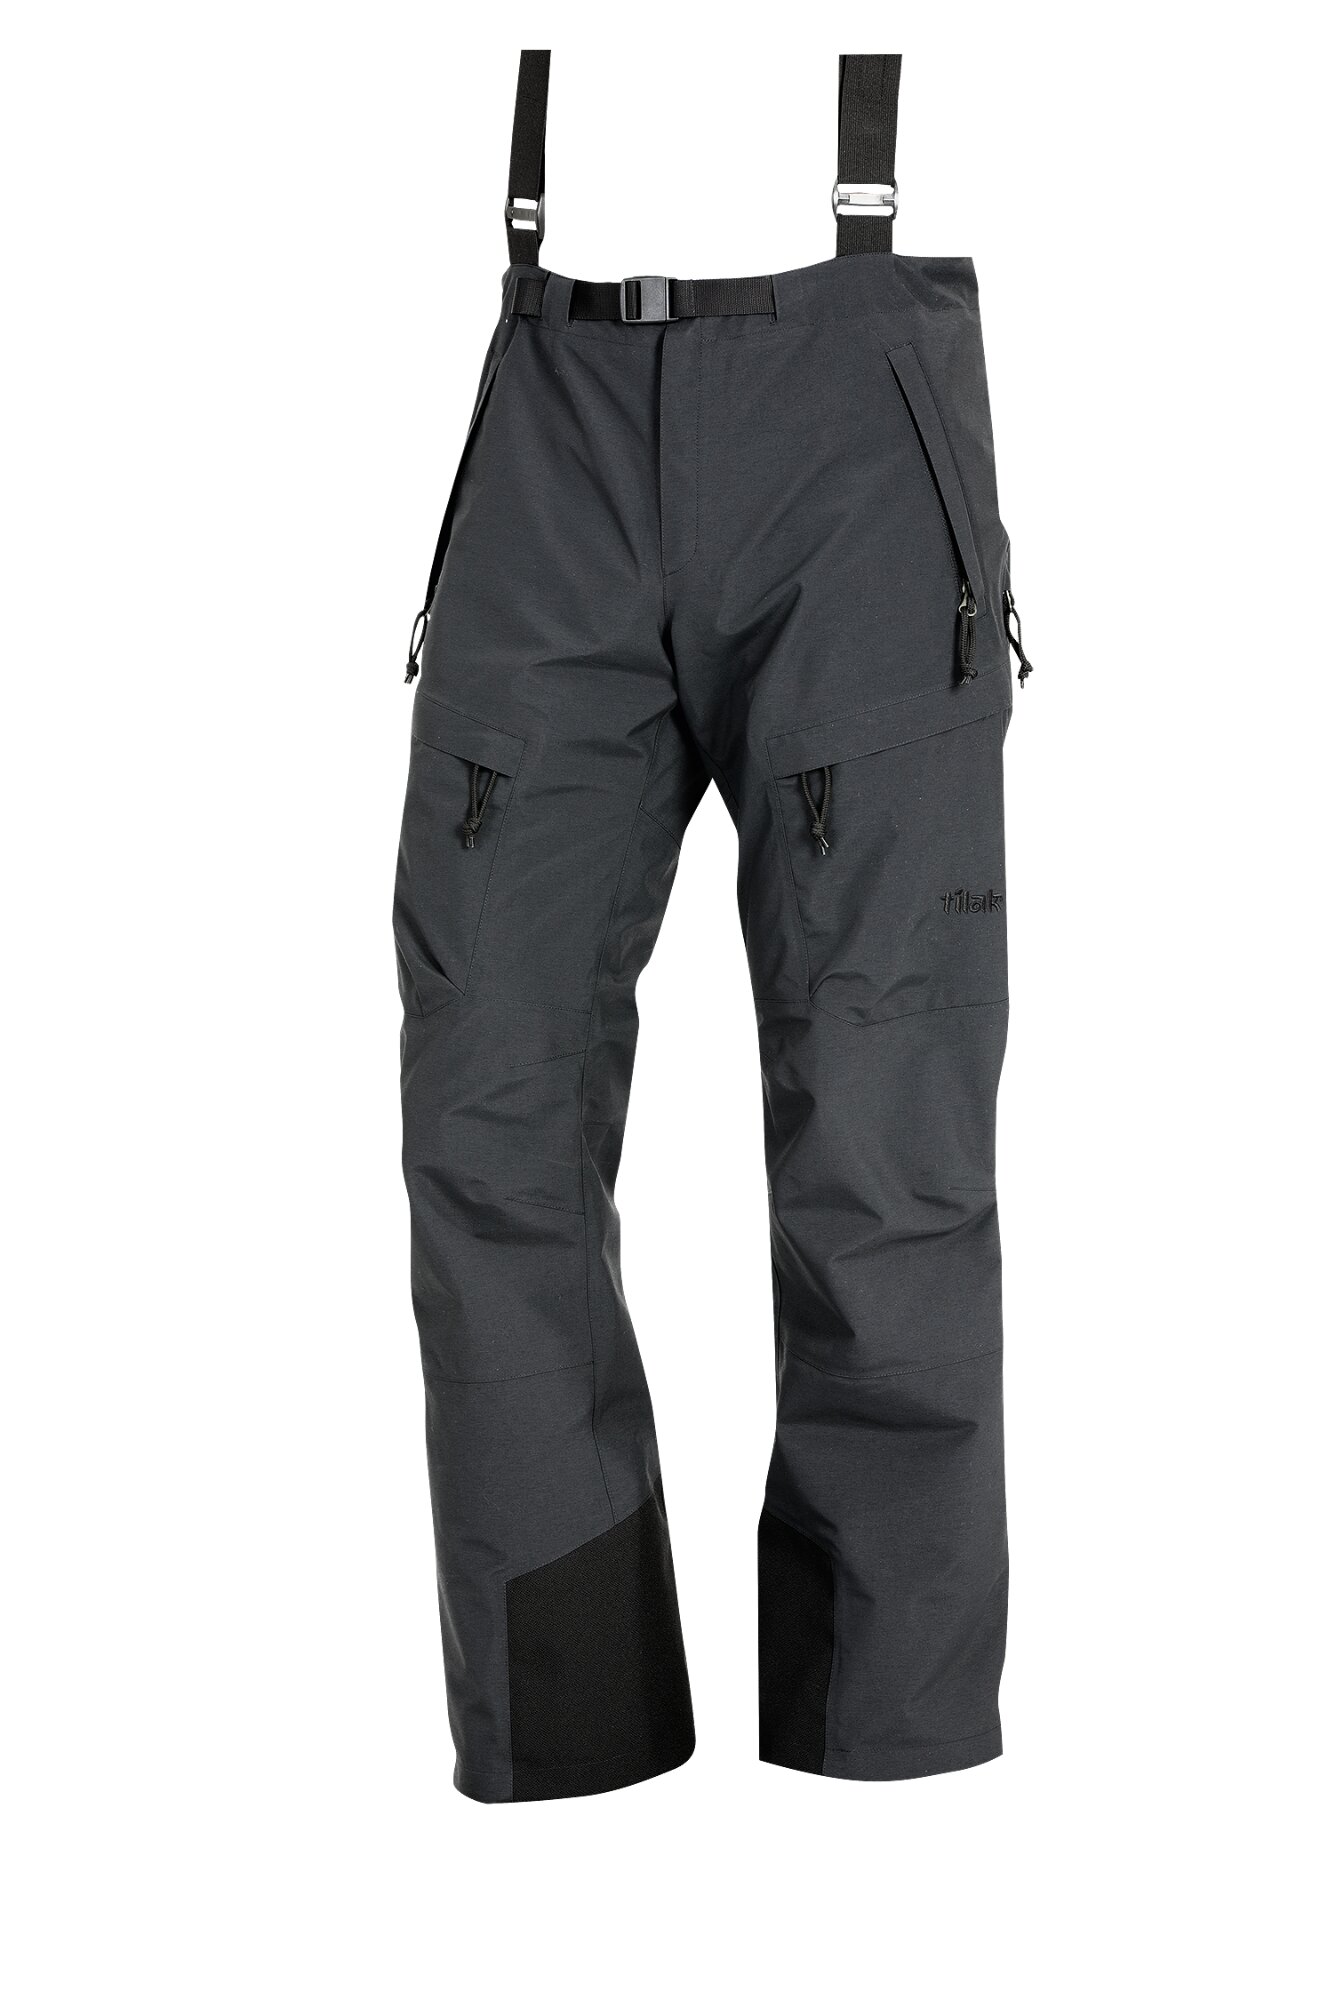 Kalhoty Evolution Gore-Tex® Tilak Military Gear® – Černá (Barva: Černá, Velikost: M)